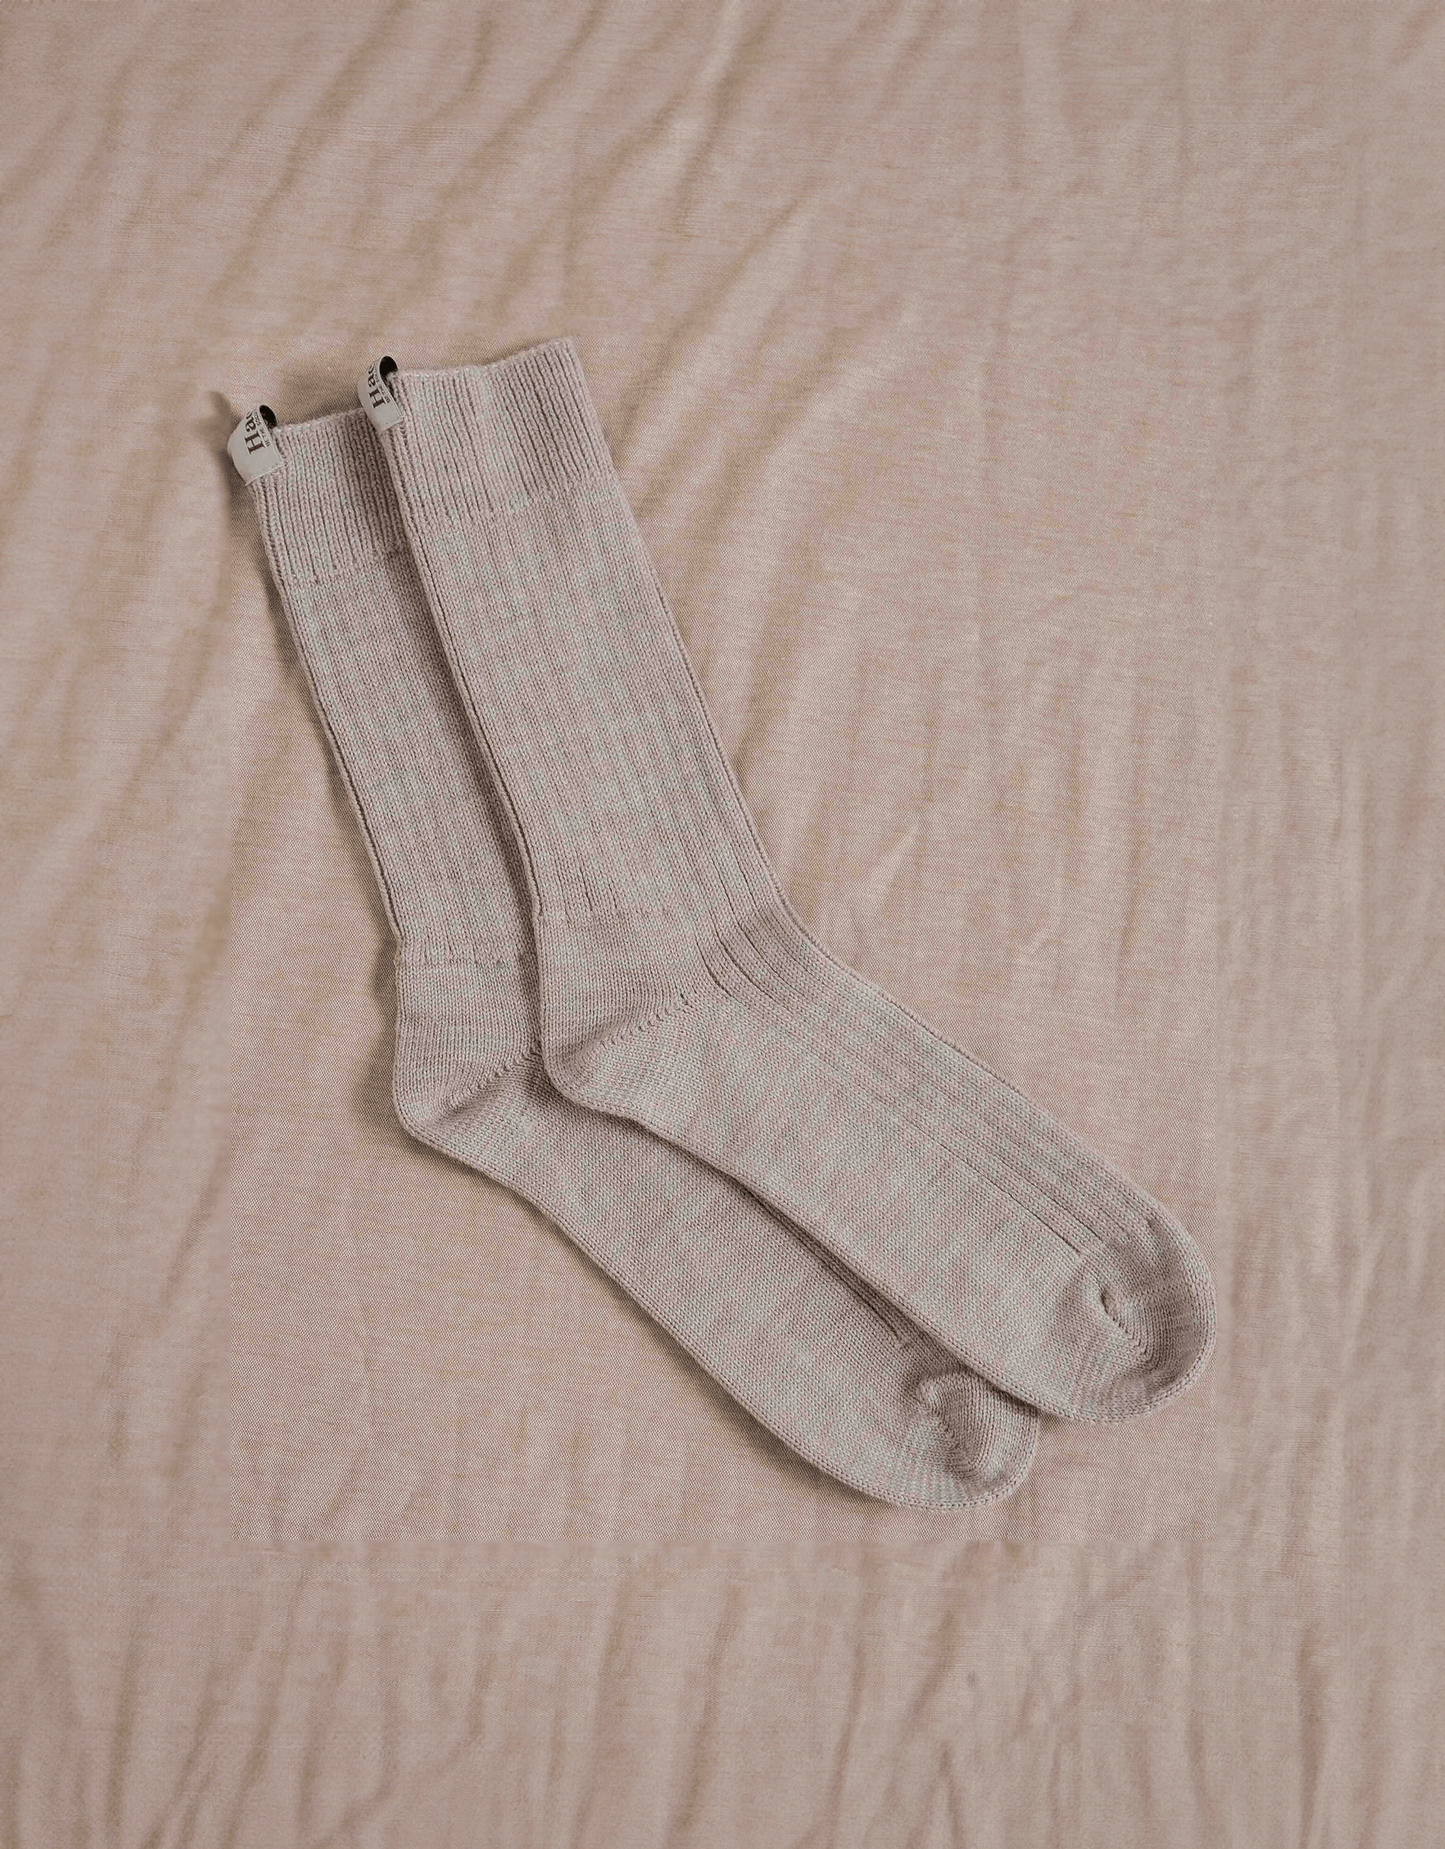 Hachure Wool Hike & Trek Socks in a stone beige colour